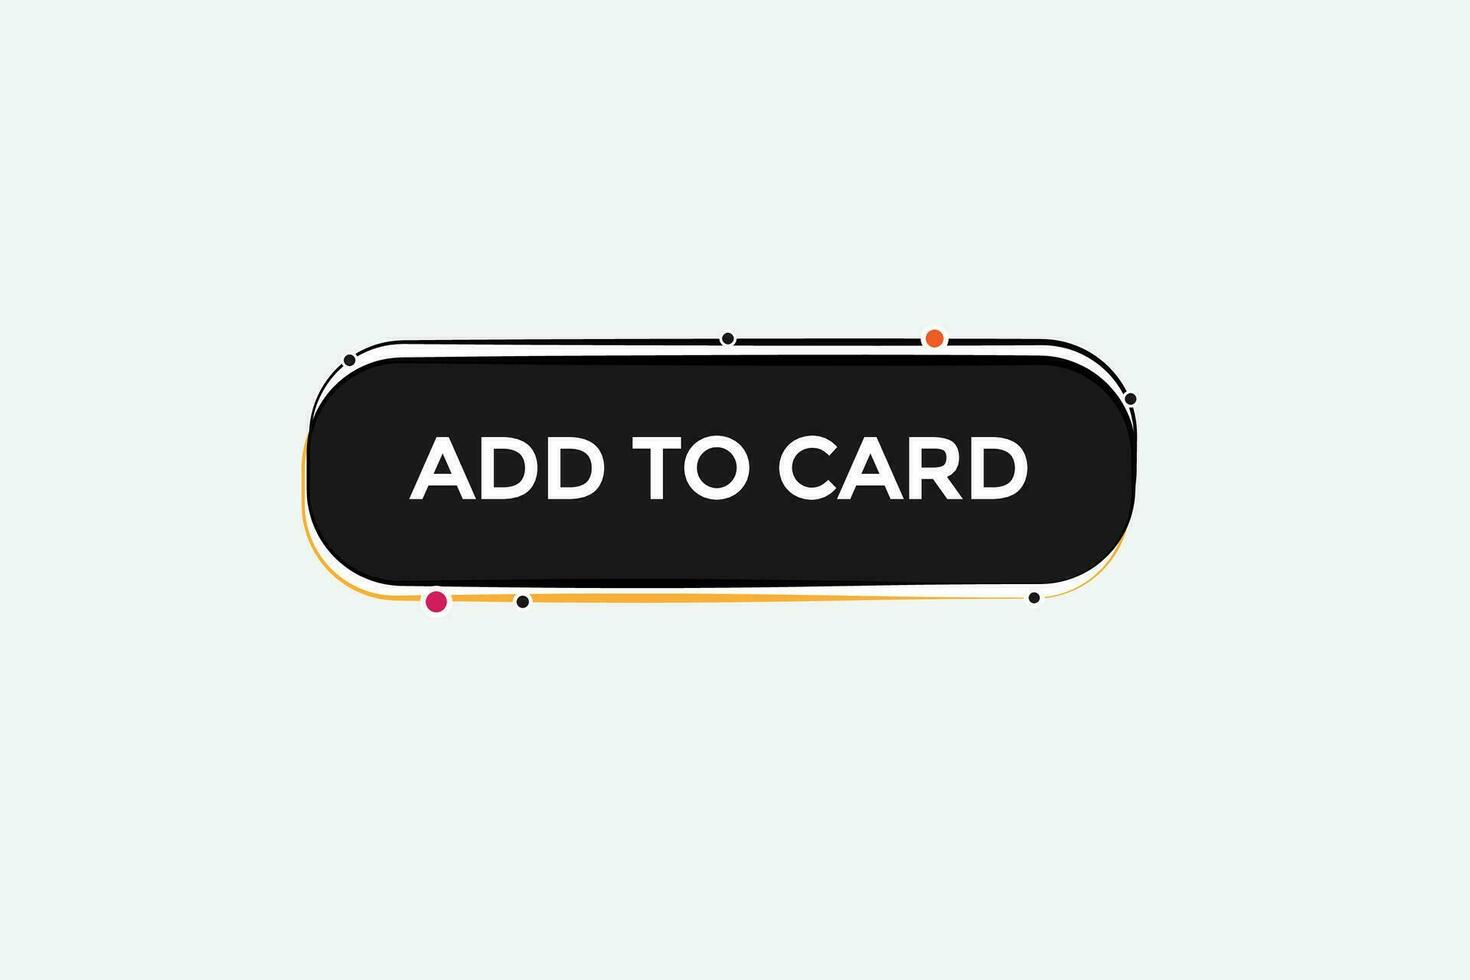 nuevo añadir a tarjeta, moderno, sitio web, hacer clic botón, nivel, firmar, discurso, burbuja bandera, vector